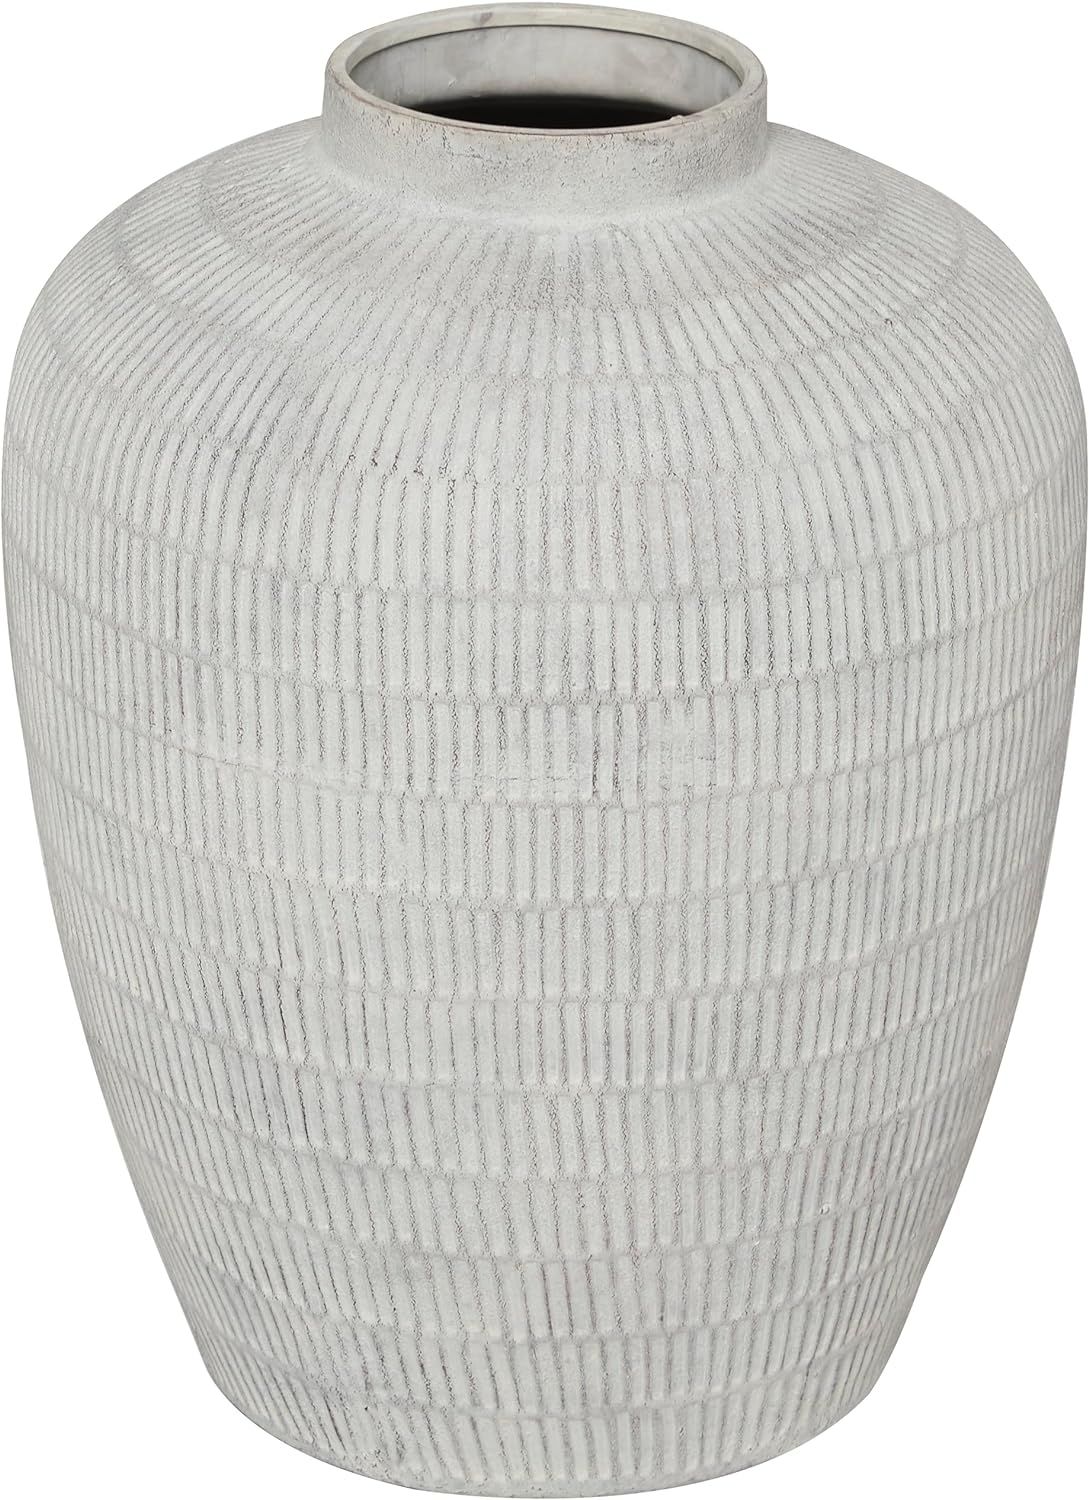 Deco 79 Ceramic Decorative Vase Textured Centerpiece Vase with Linear Pattern, Flower Vase for Ho... | Amazon (US)